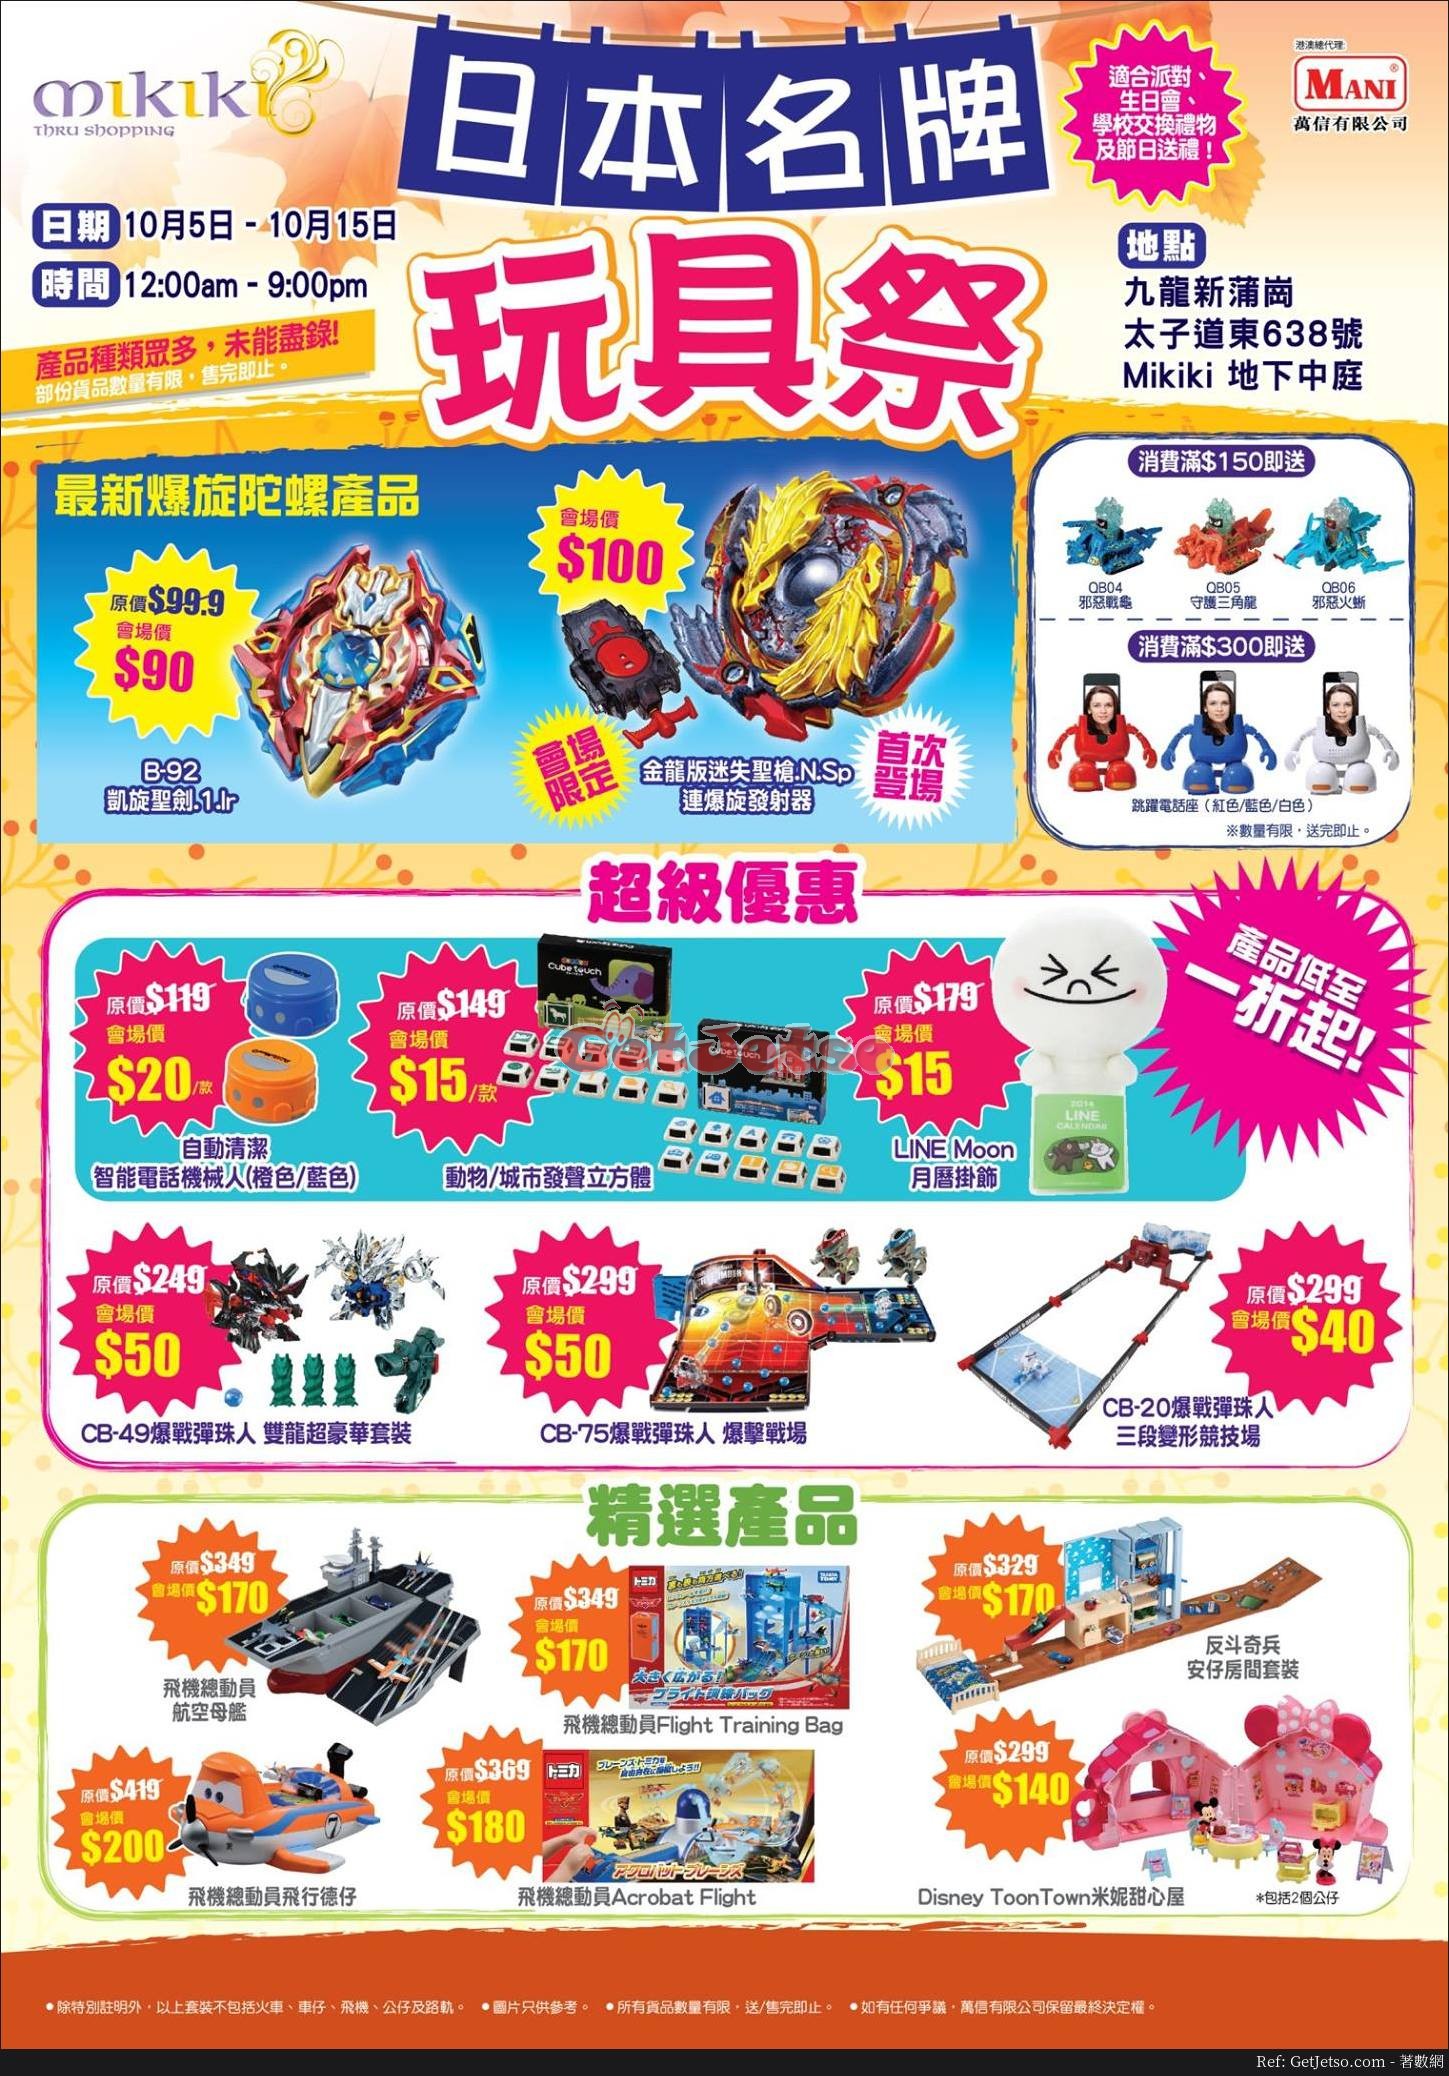 Mikiki 日本名牌玩具祭減價優惠(至17年10月15日)圖片1